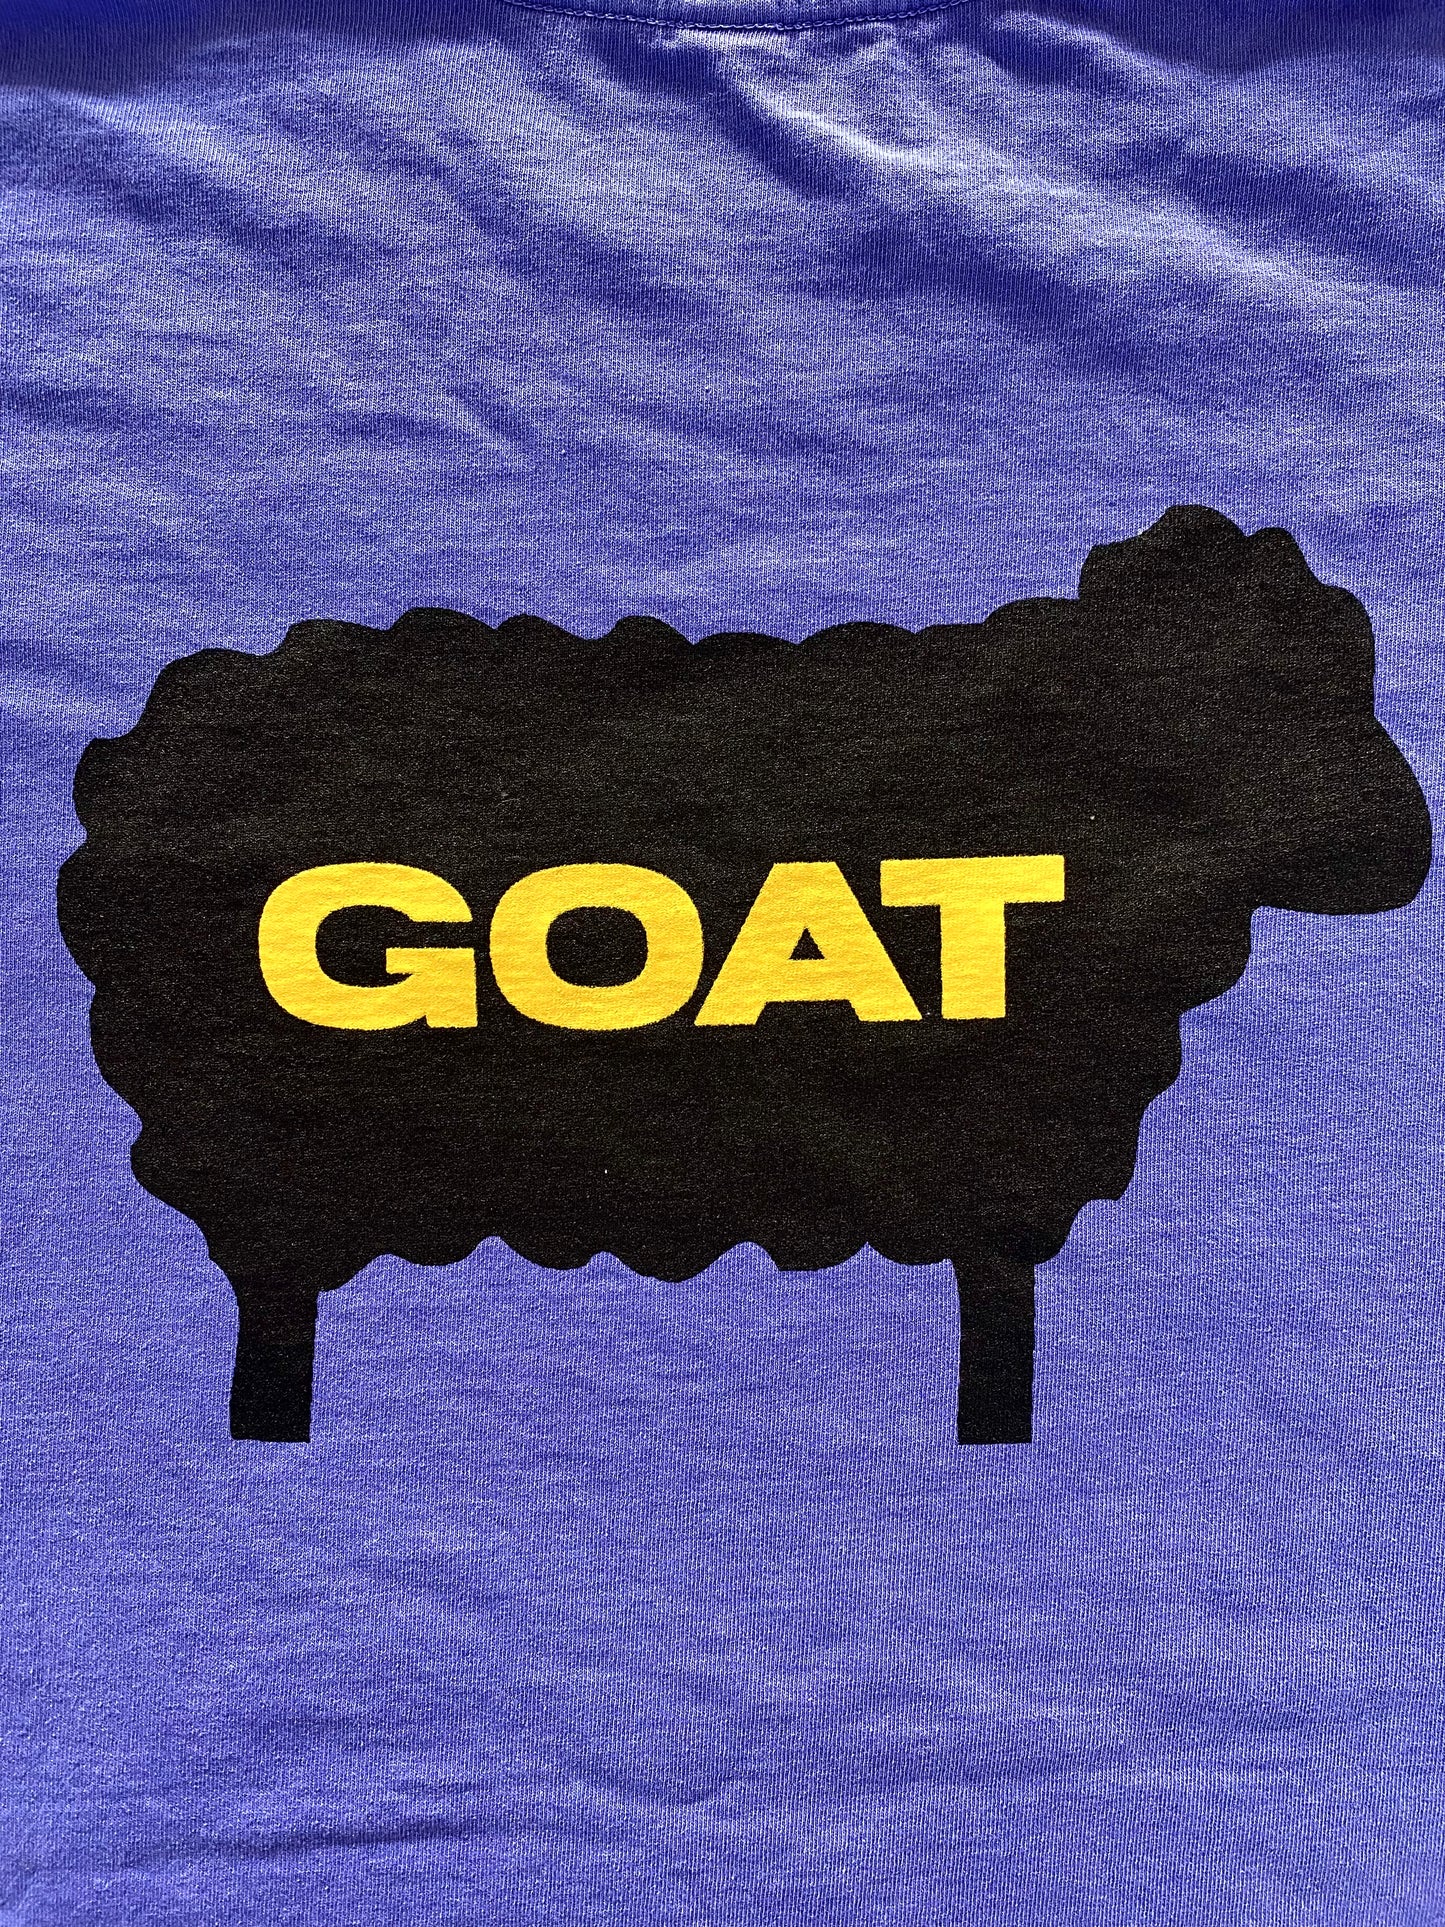 “Black Sheep Is Goat” Tee